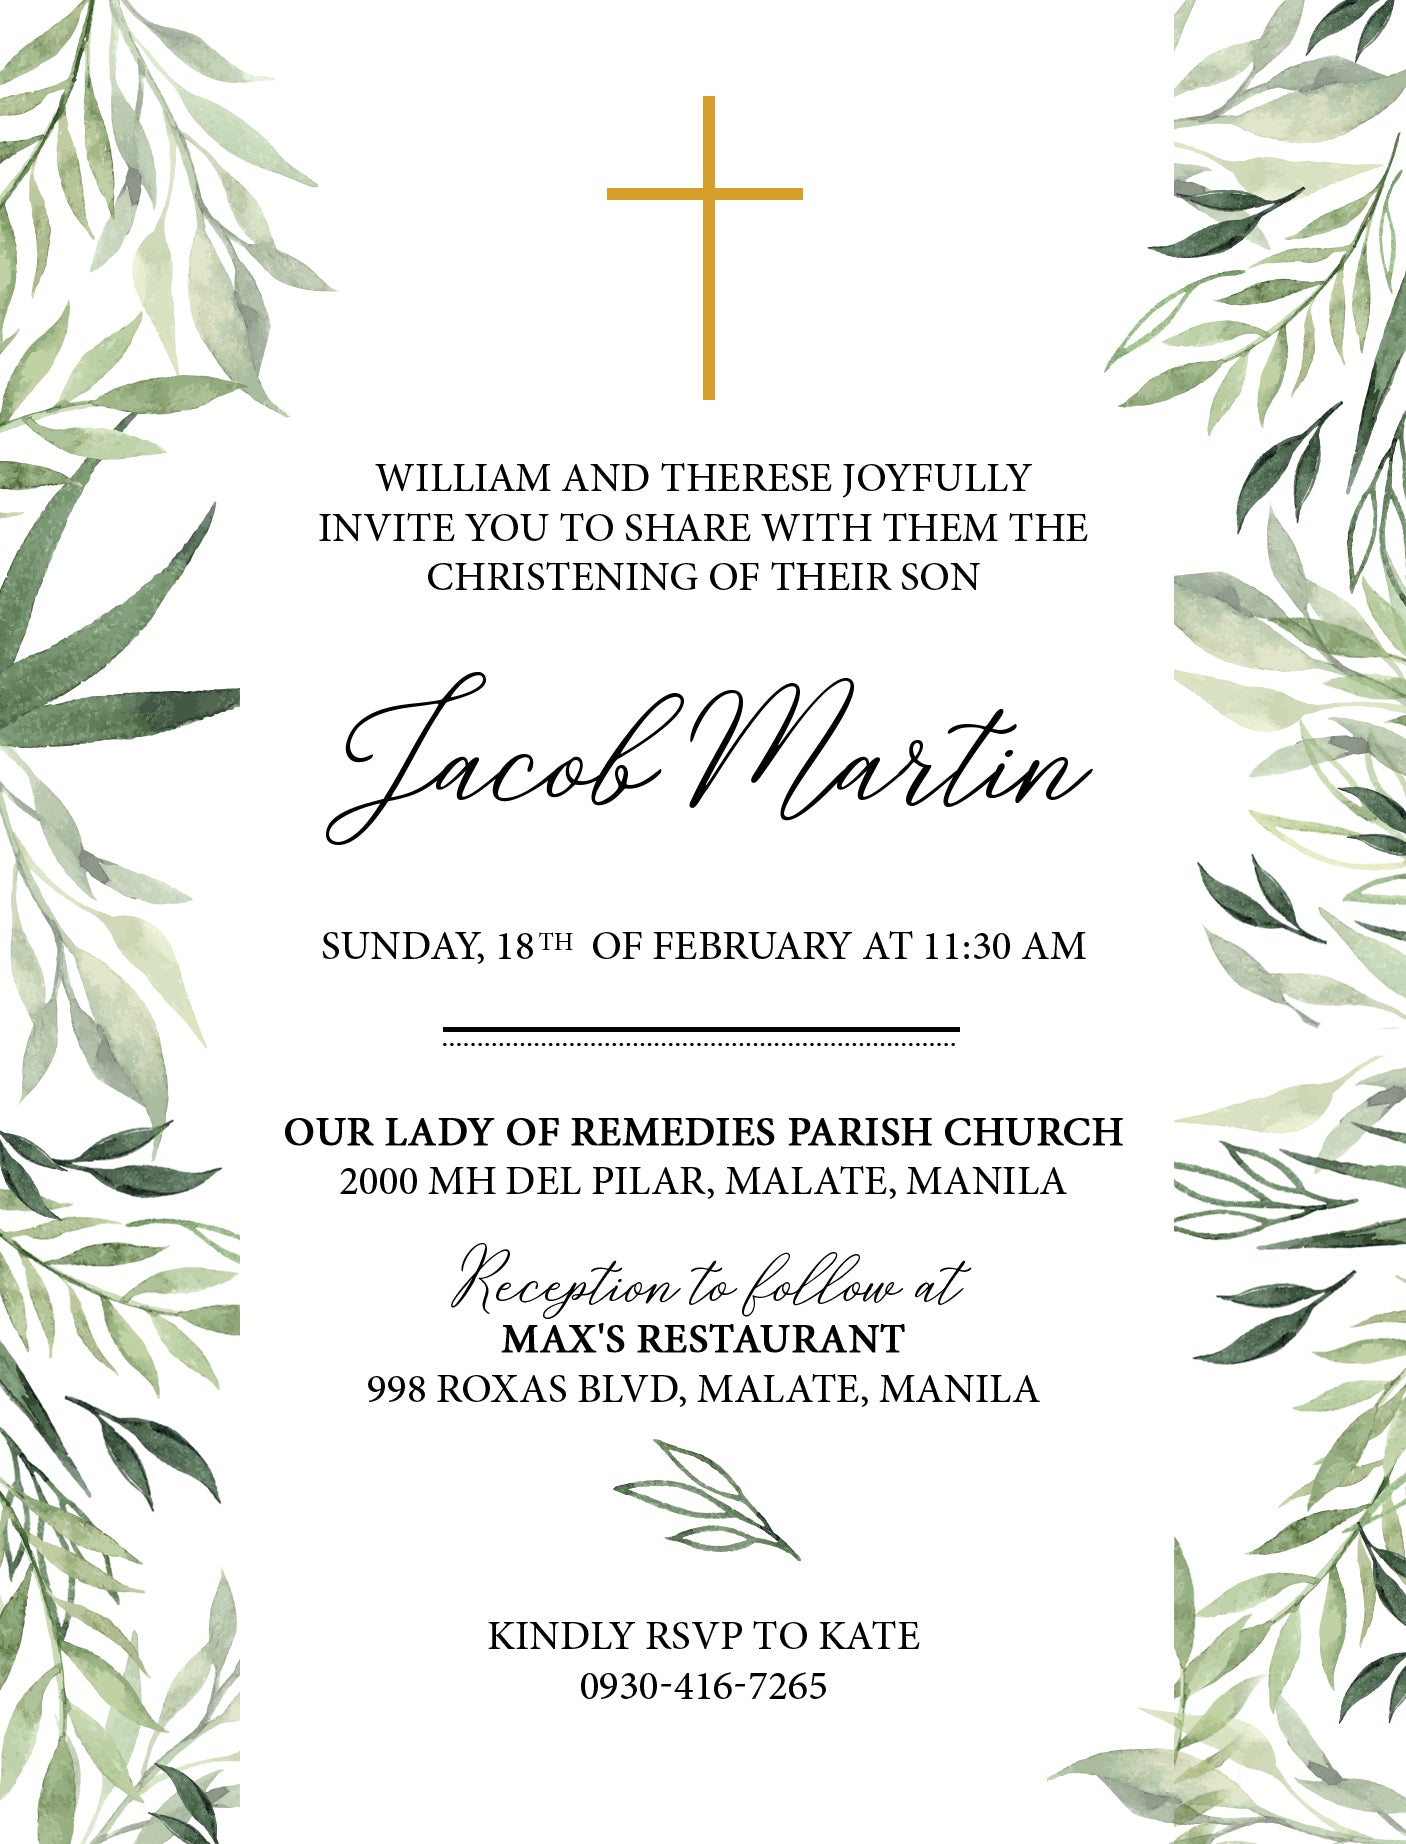 Jacob Christening Invitation